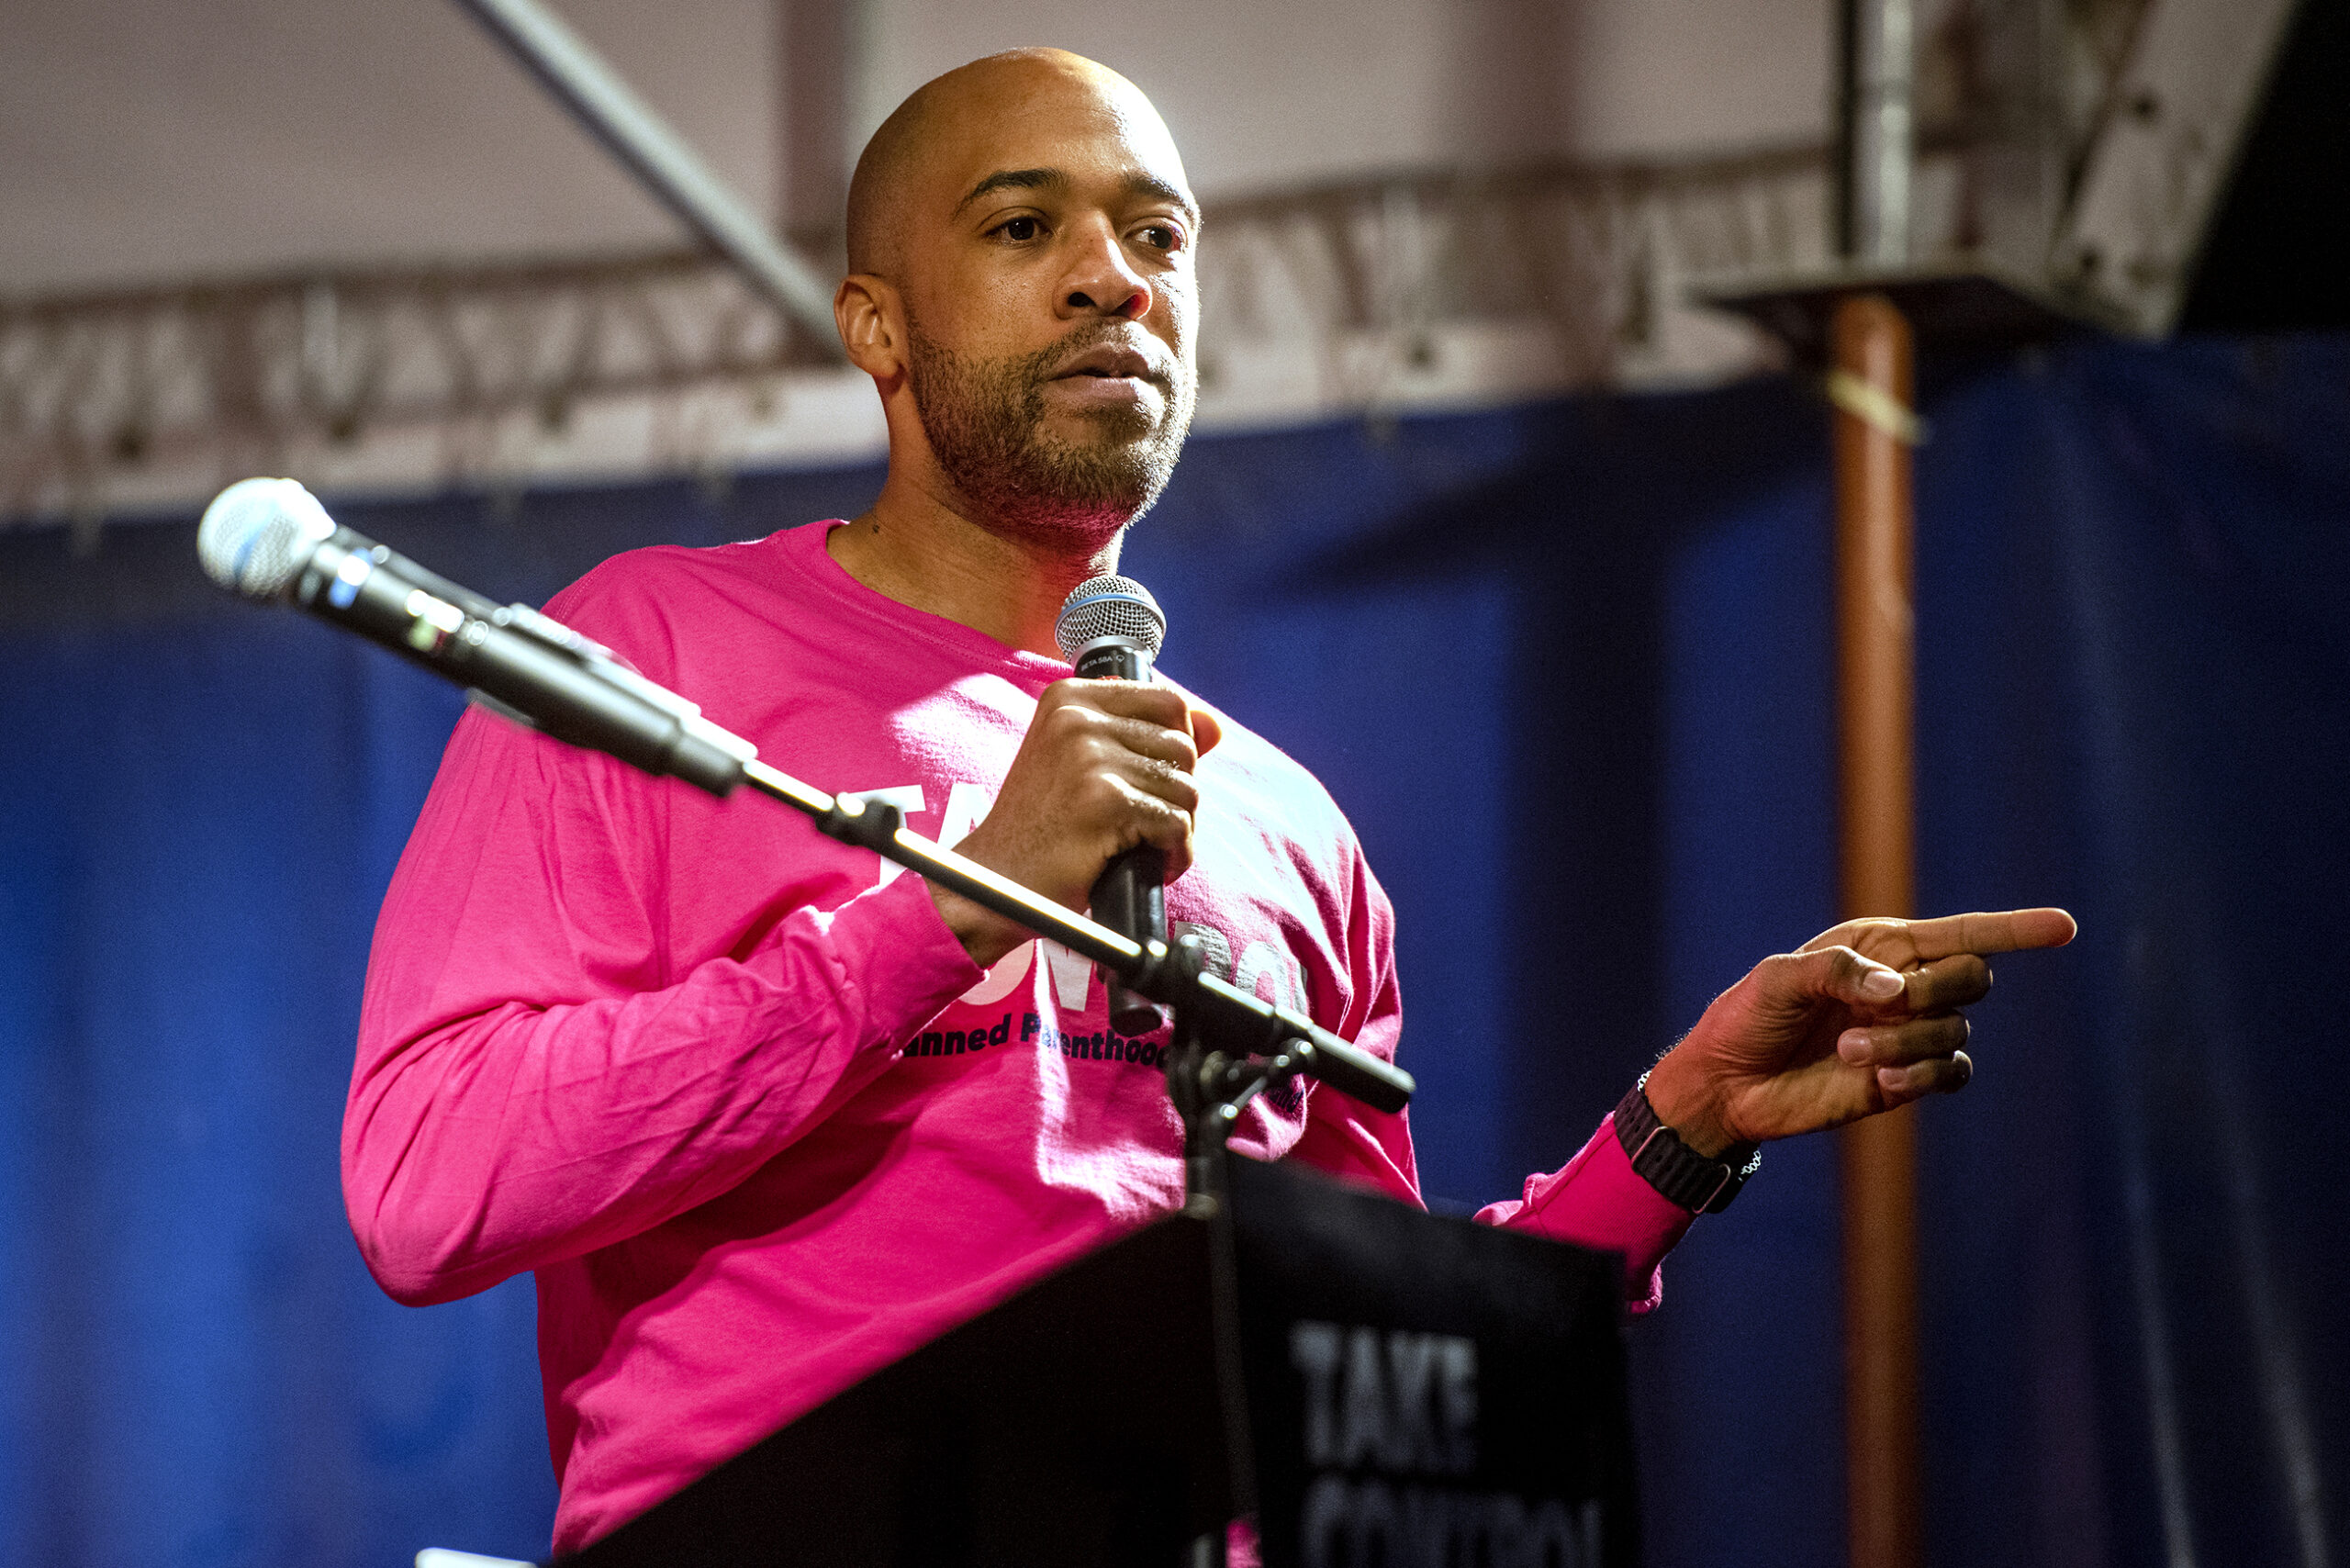 Lt. Gov. Mandela Barnes wears a pink Planned Parenthood shirt while speaking on stage.